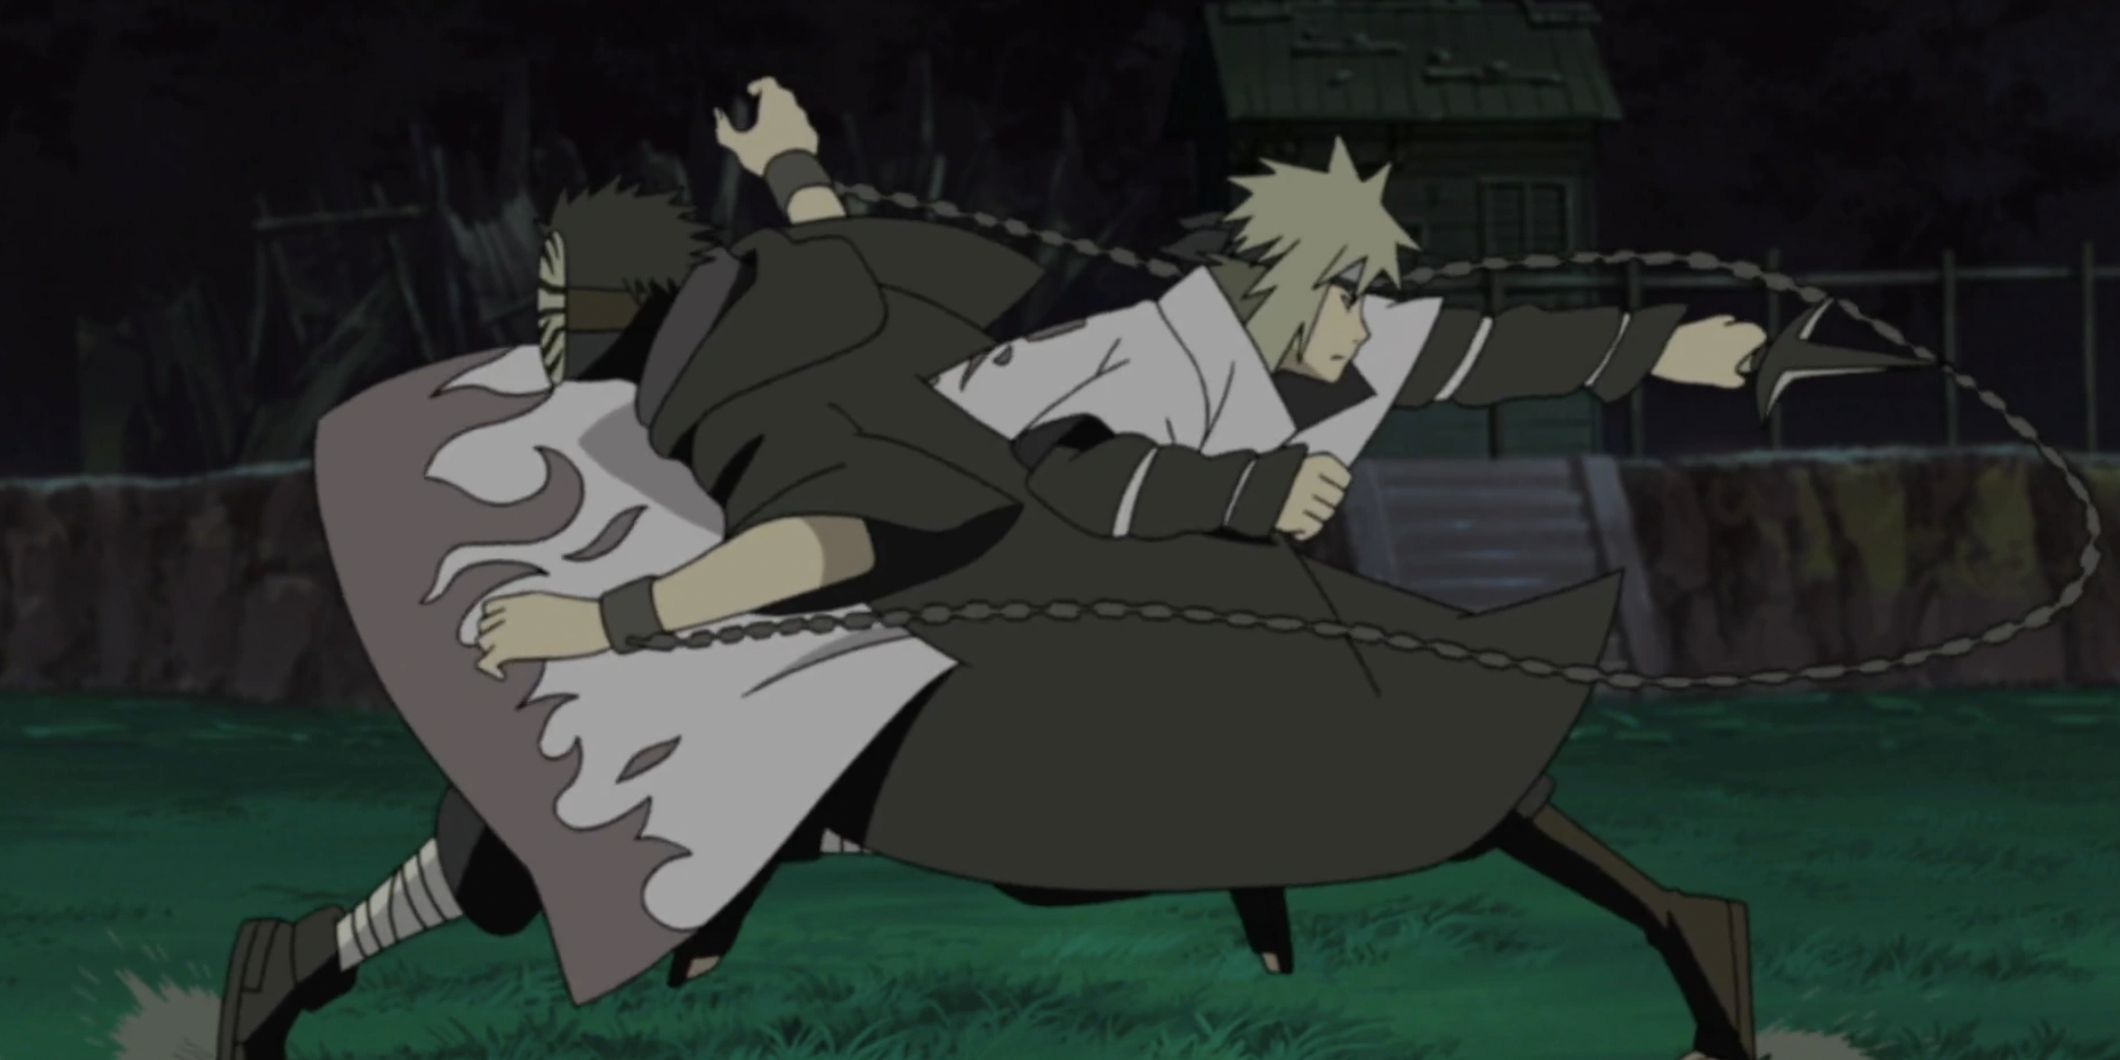 Minato fights Tobi in a Naruto Shippuden flashback